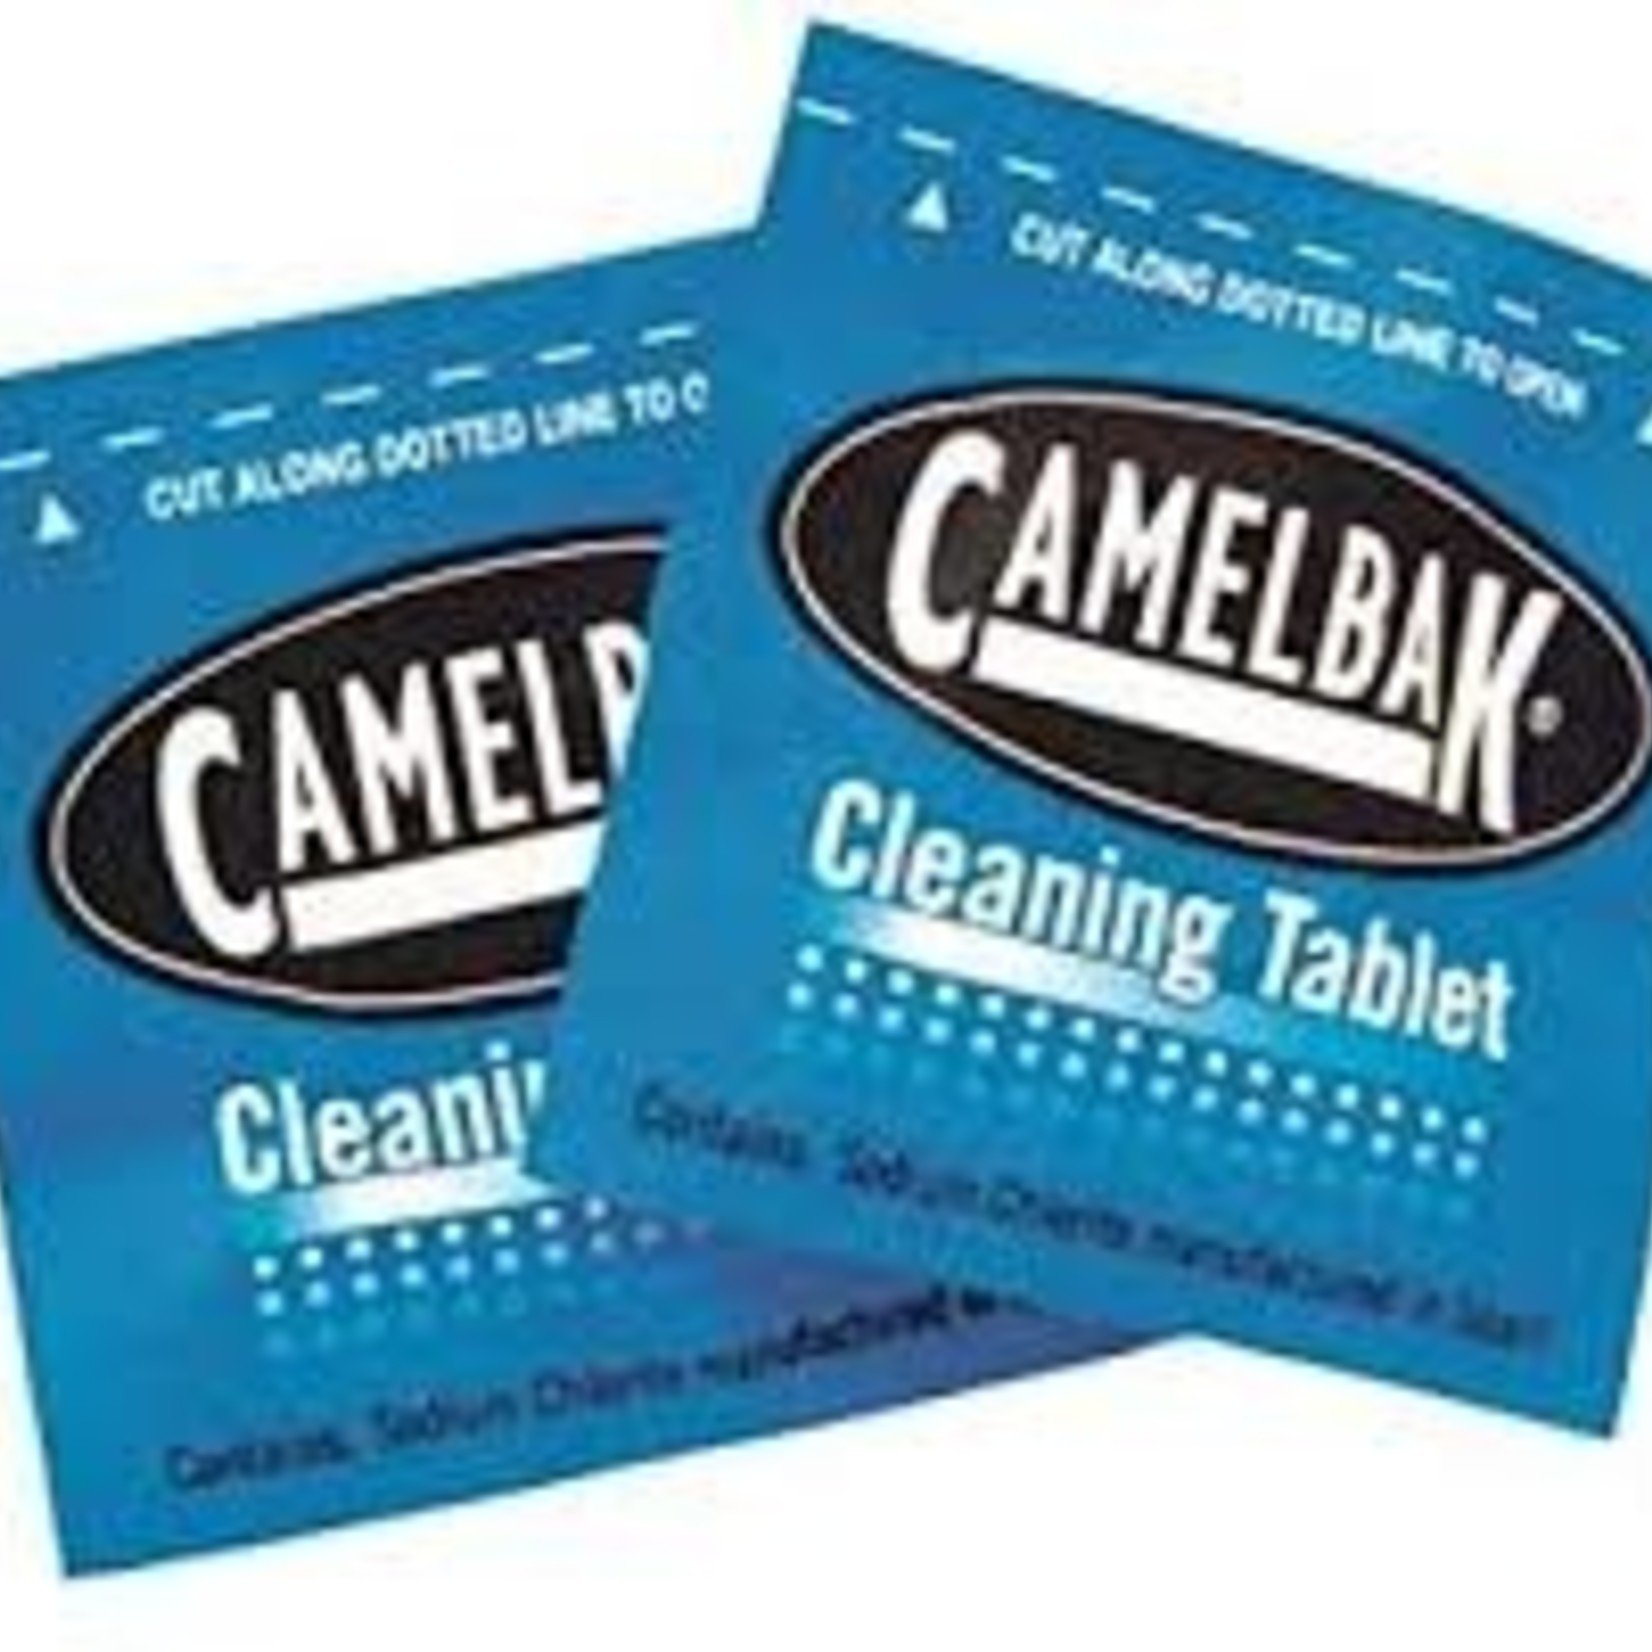 Camelbak Camelbak Cleaning Tablets - 8pk